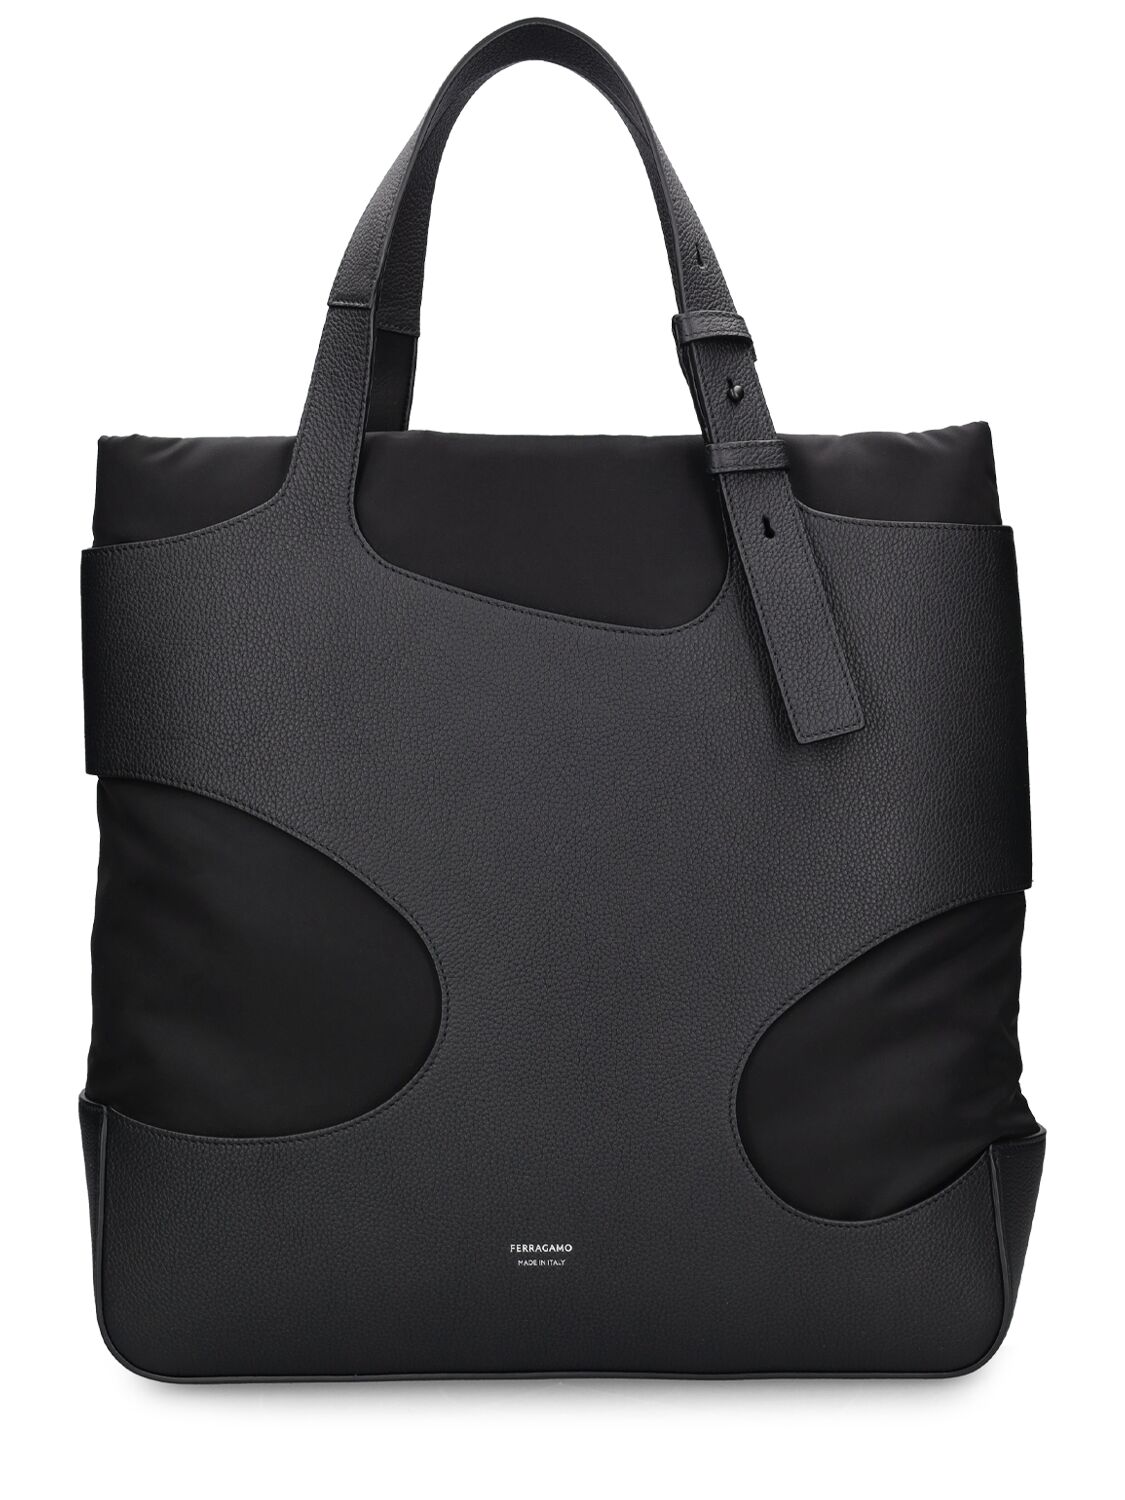 Ferragamo Cut Out Leather Logo Tote Bag In Black